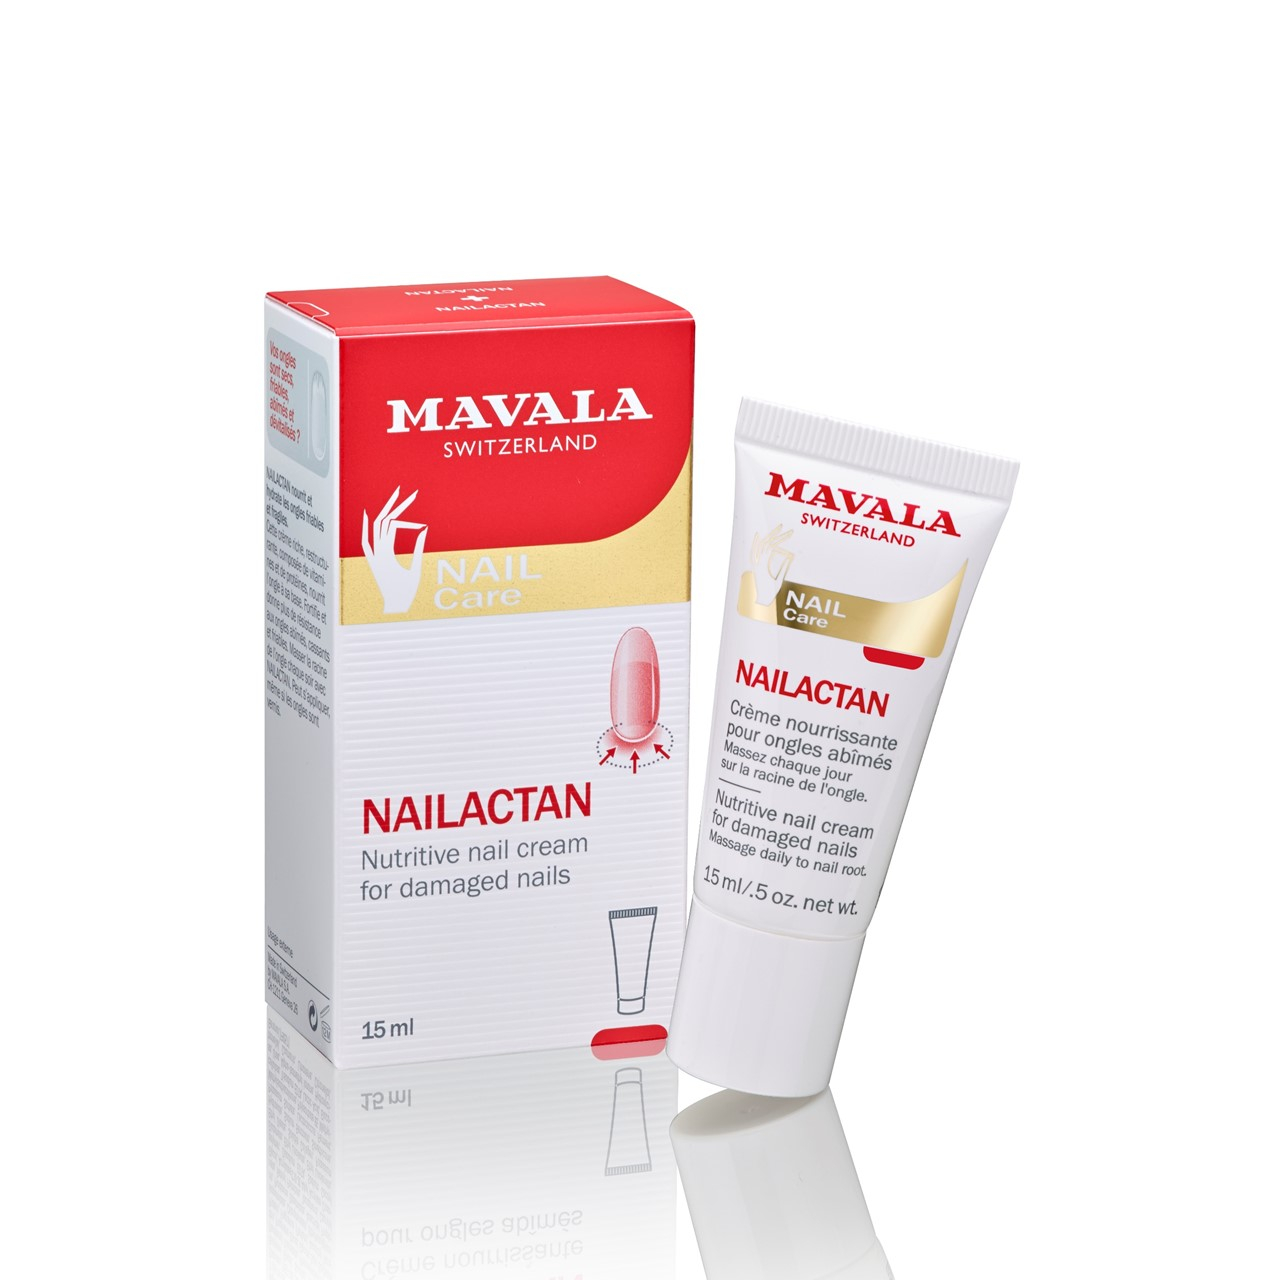 Mavala Nailactan Nutritive Nail Cream 15ml (0.51fl oz)